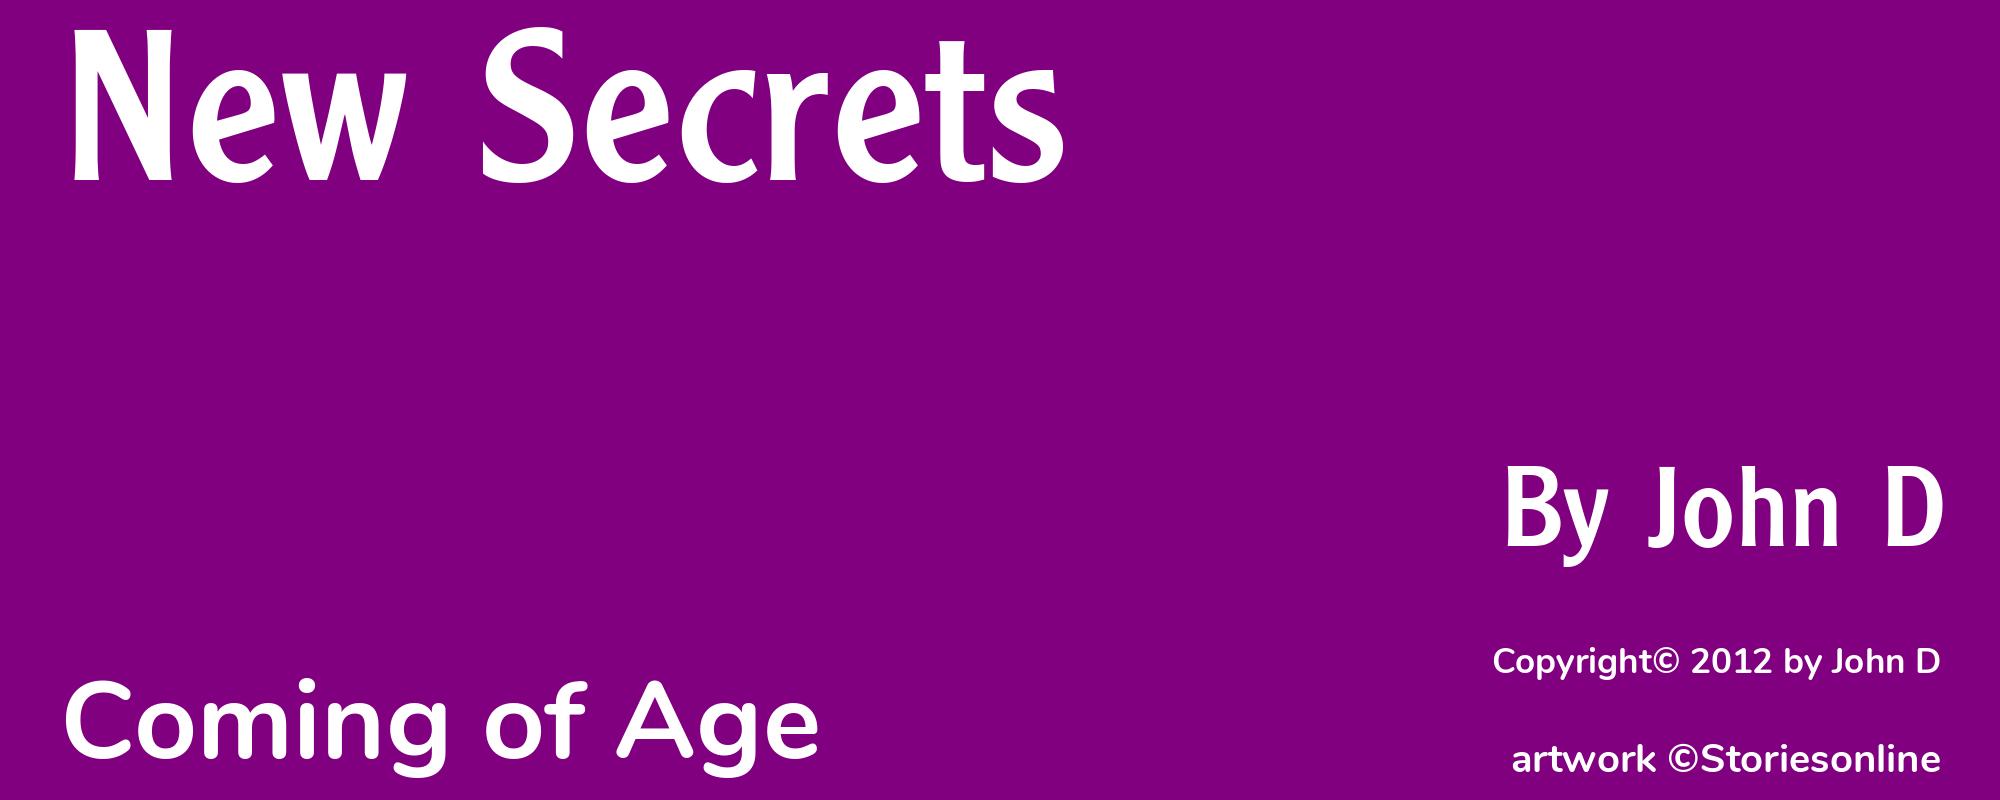 New Secrets - Cover